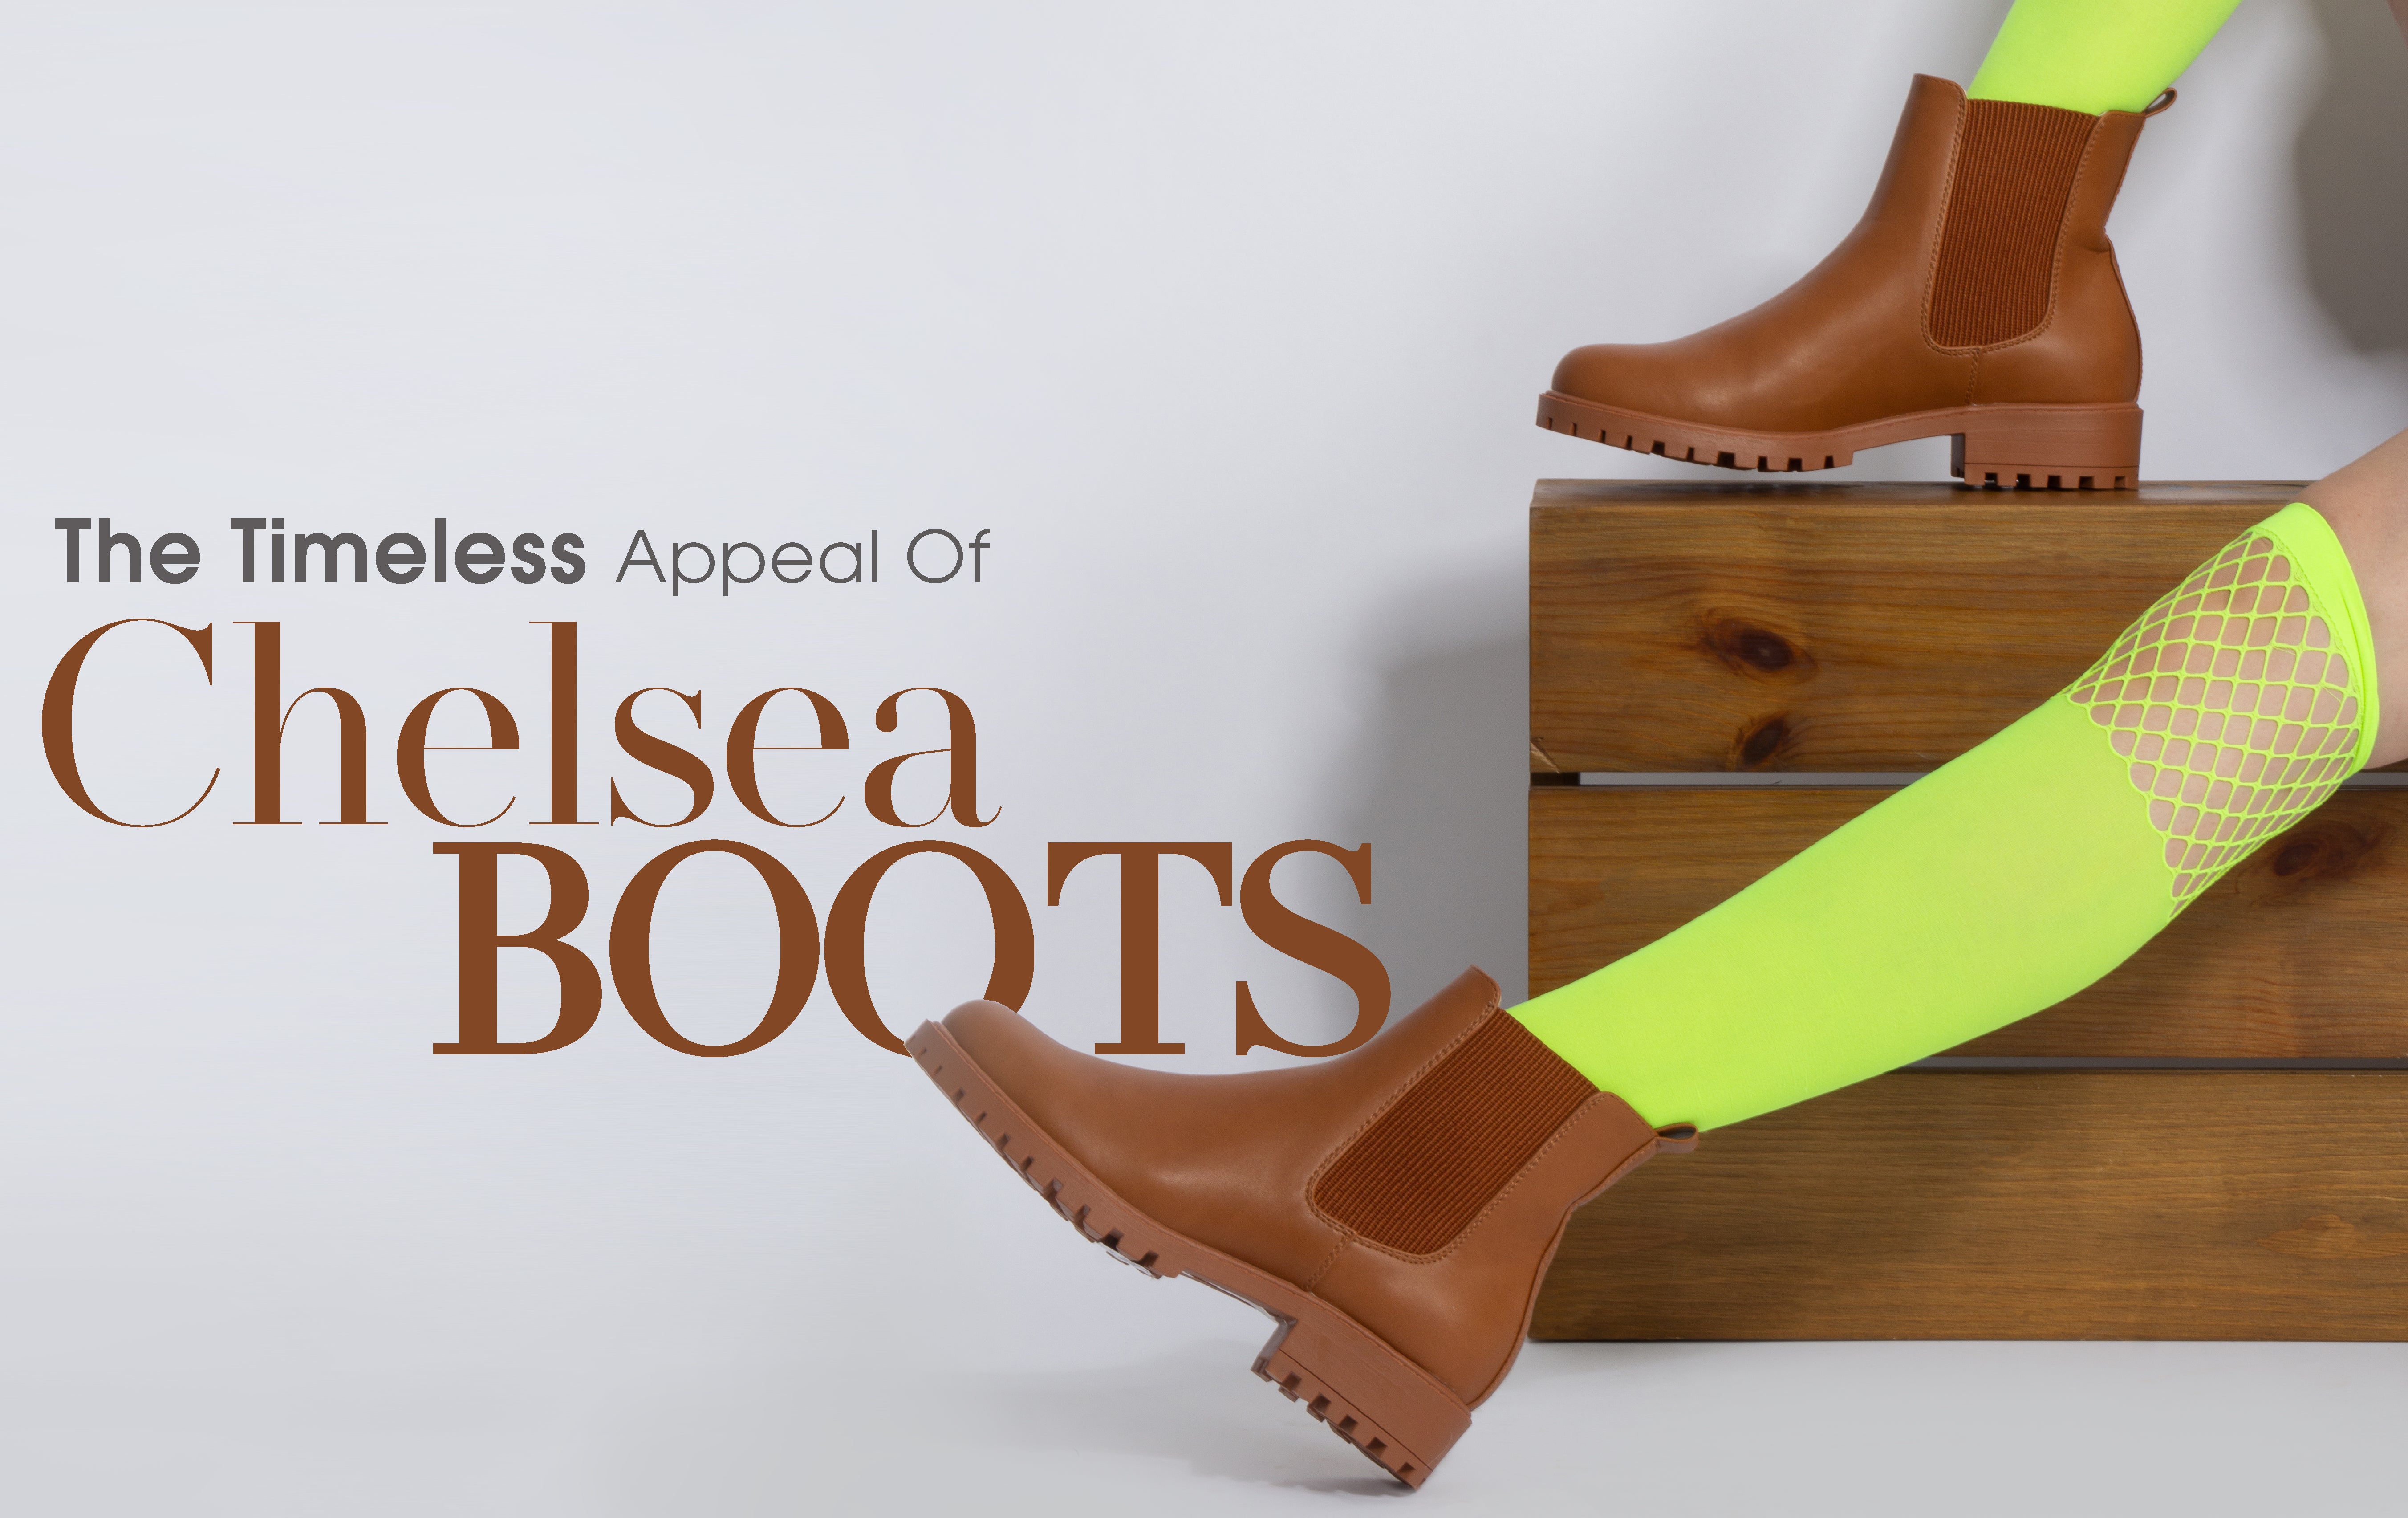 Daya tarik Chelsea Boots yang abadi!